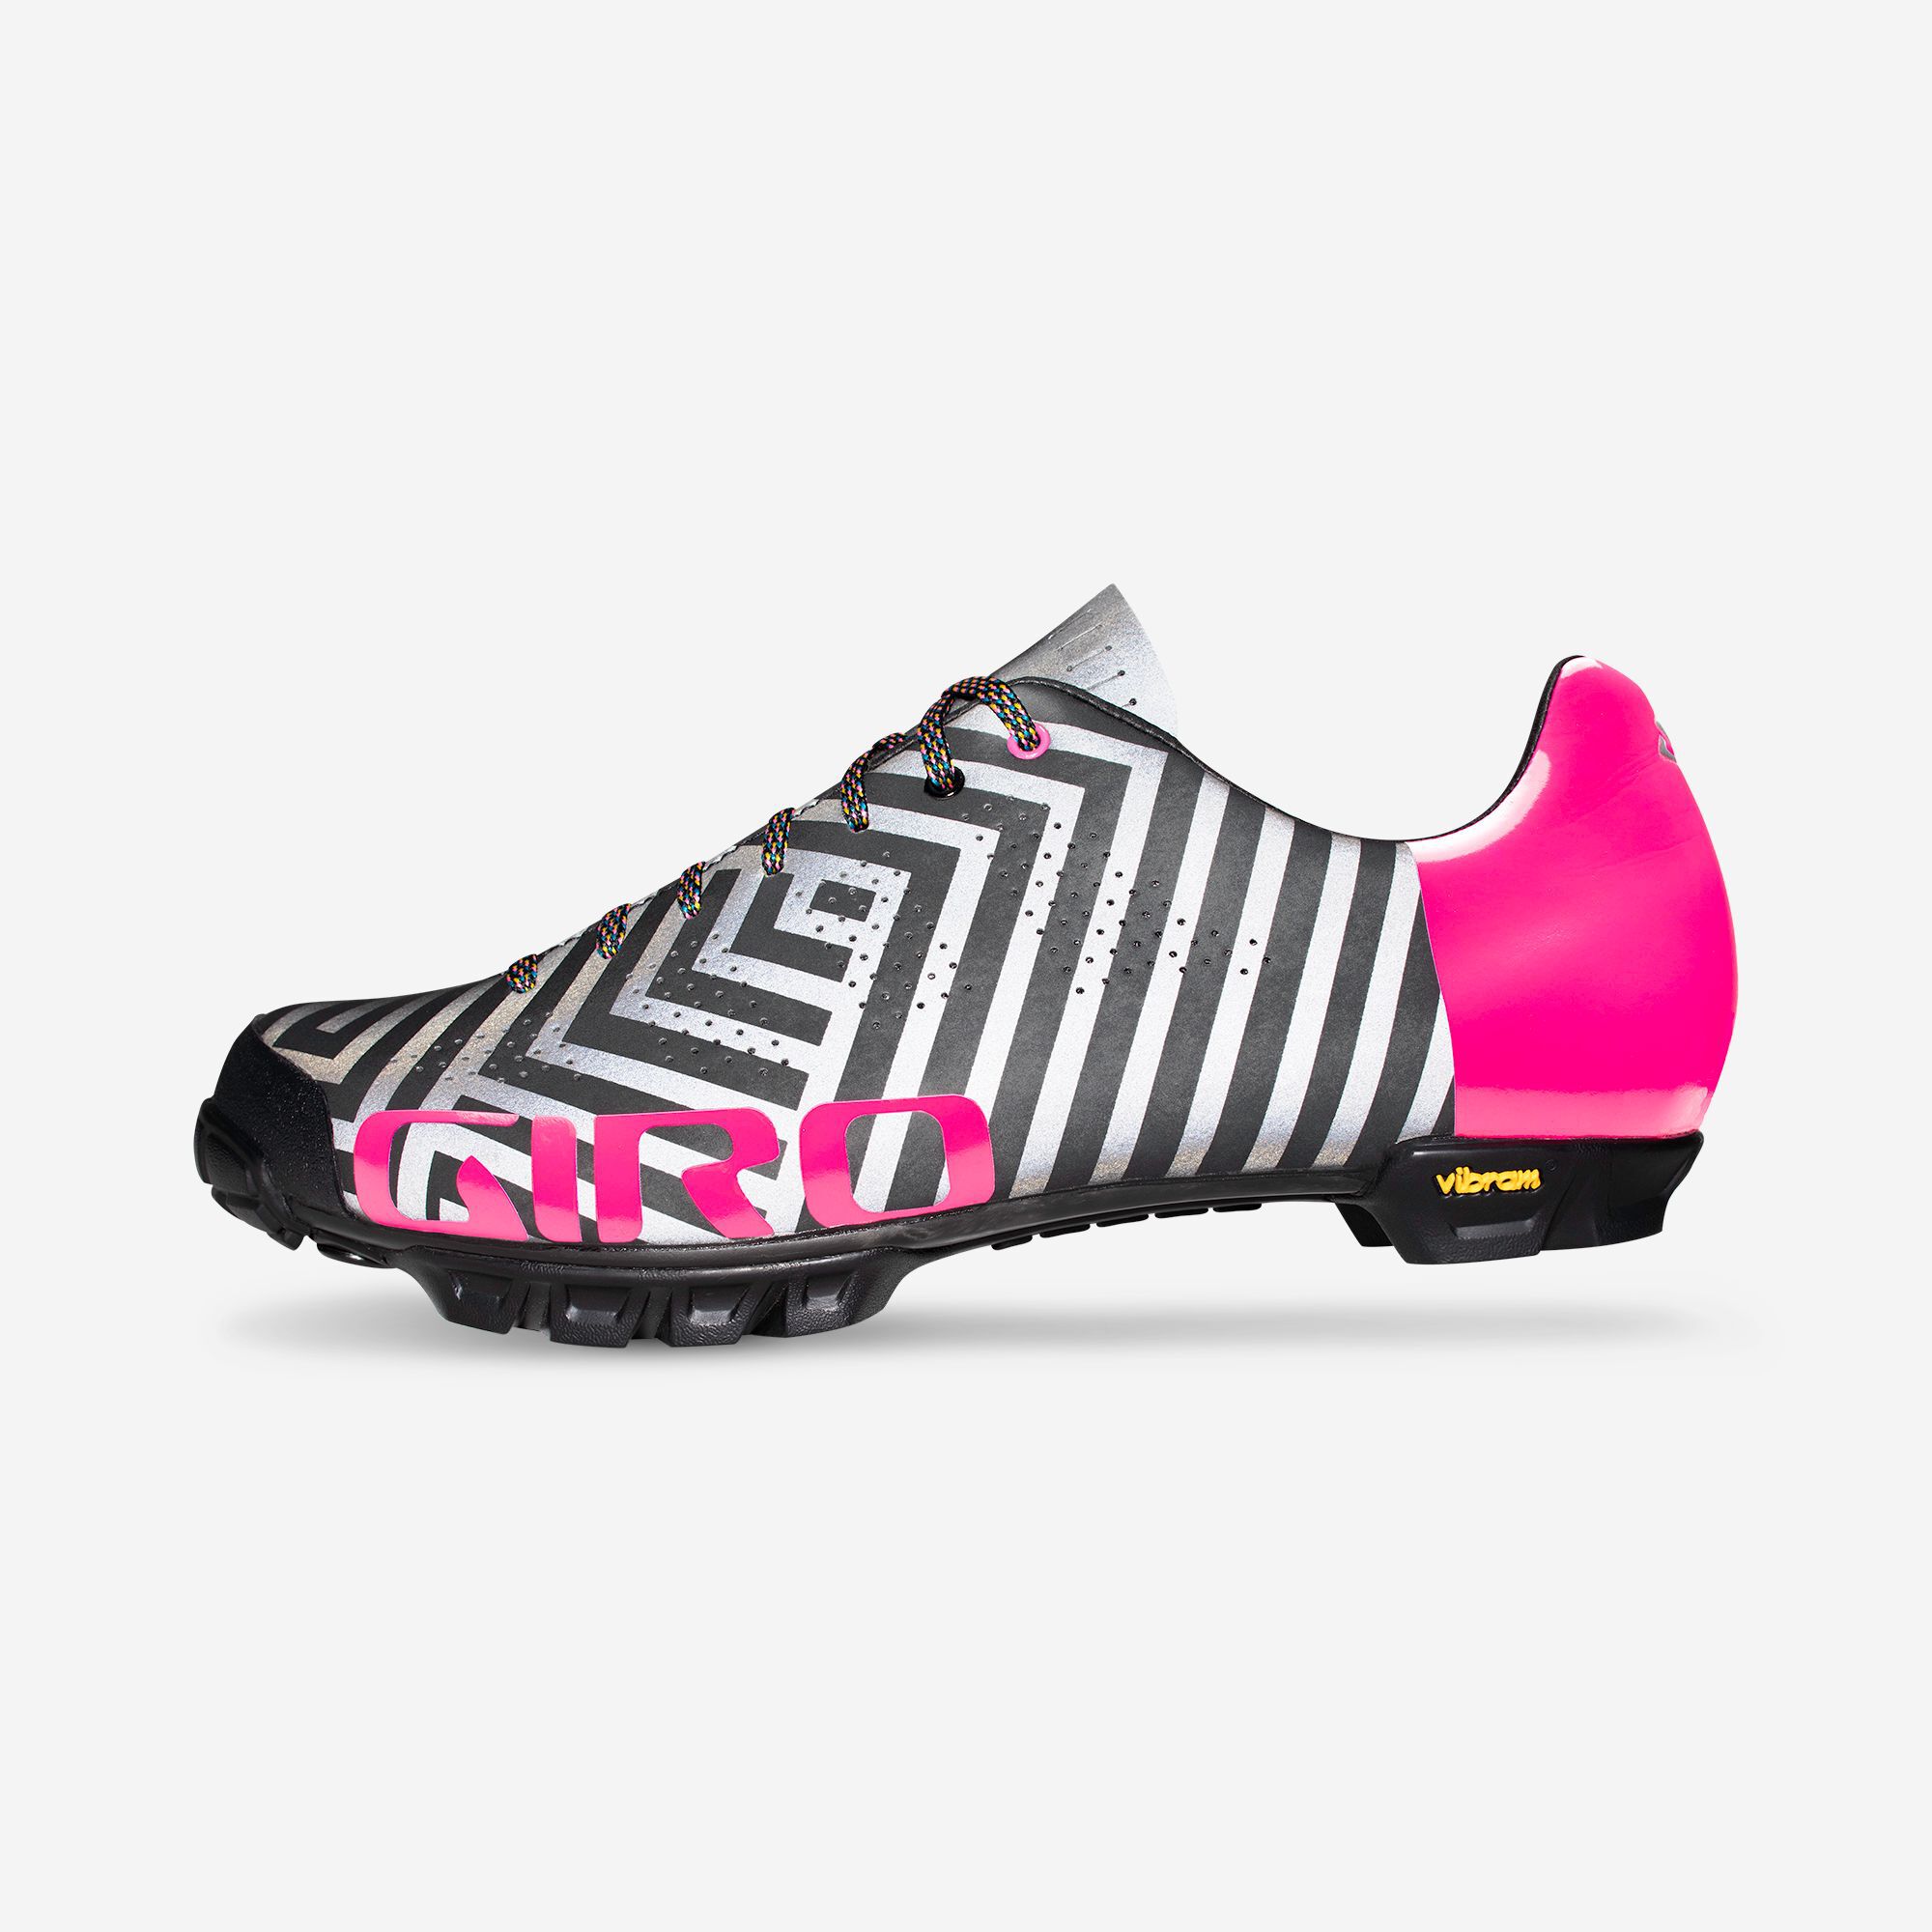 Giro Empire VR90 MTB Fahrrad Schuhe schwarz/grün 2019 